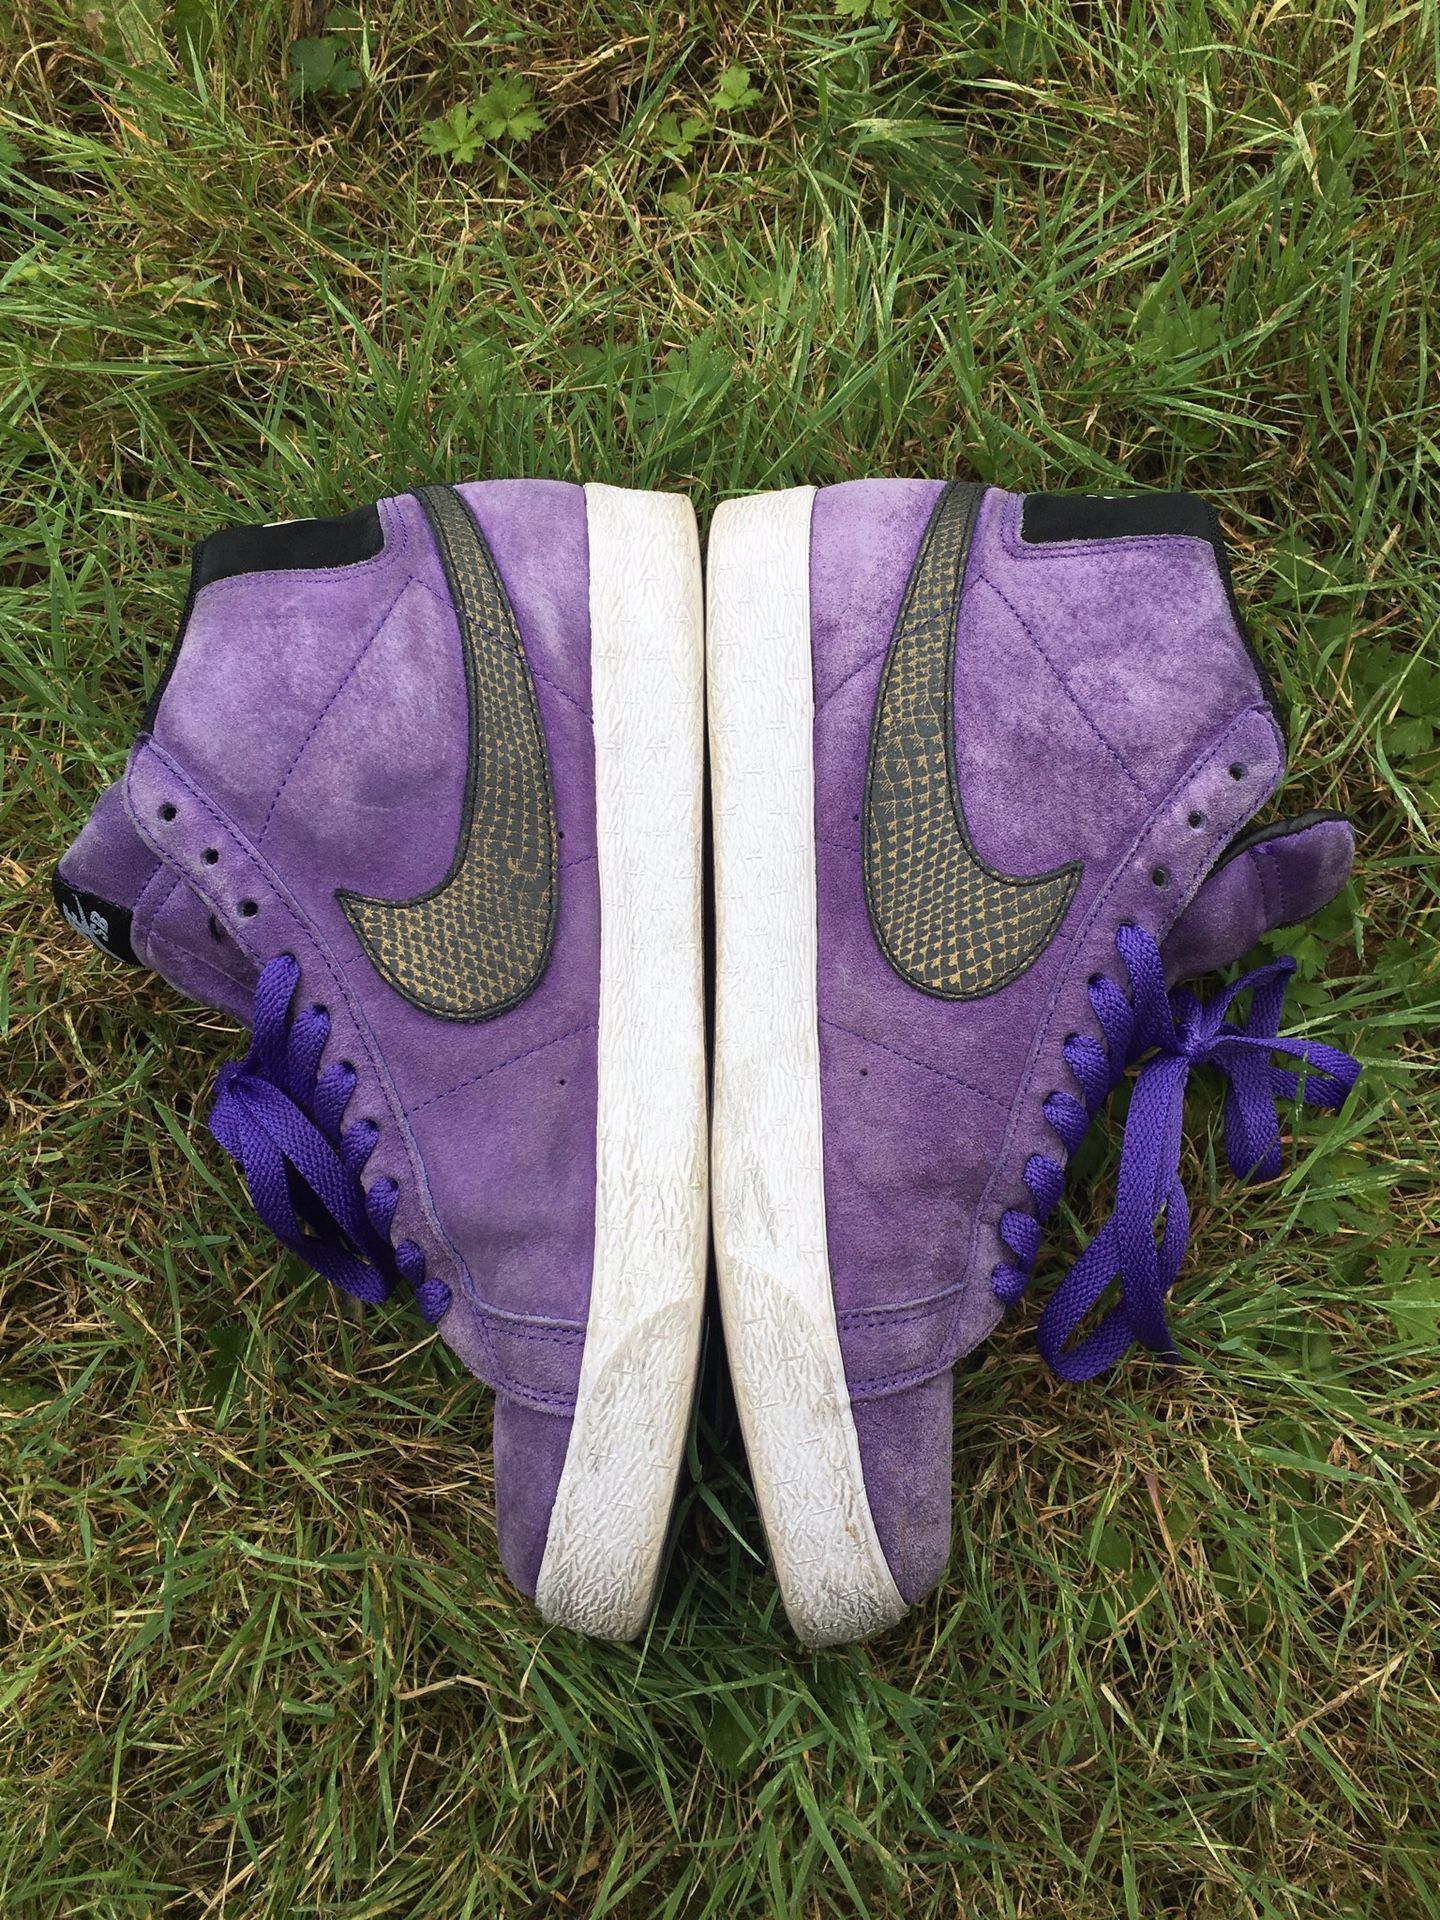 2008 Nike sb blazer purple rain men’s size 9.5